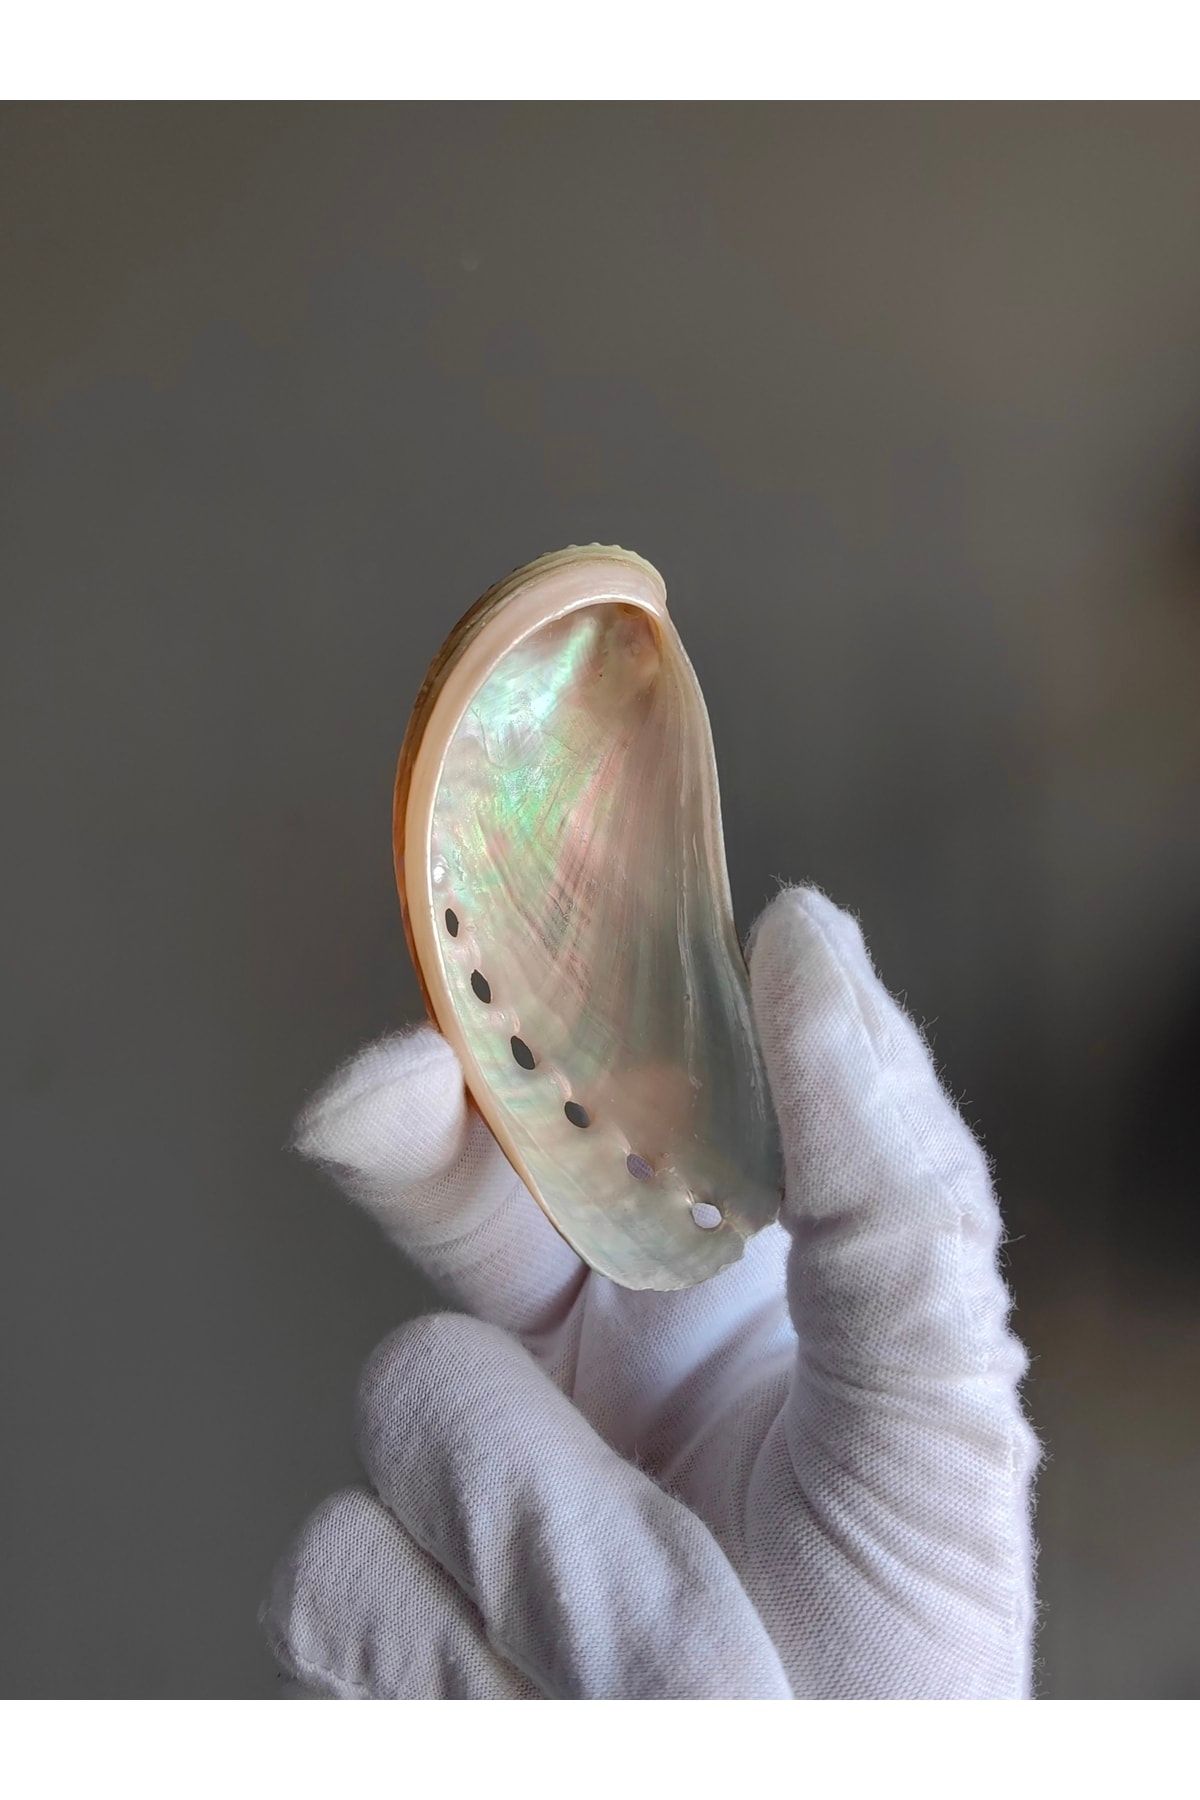 Seashell Rio Deniz Kabuğu ; Naturel Abalon / 1 Adet / 6-8 Cm